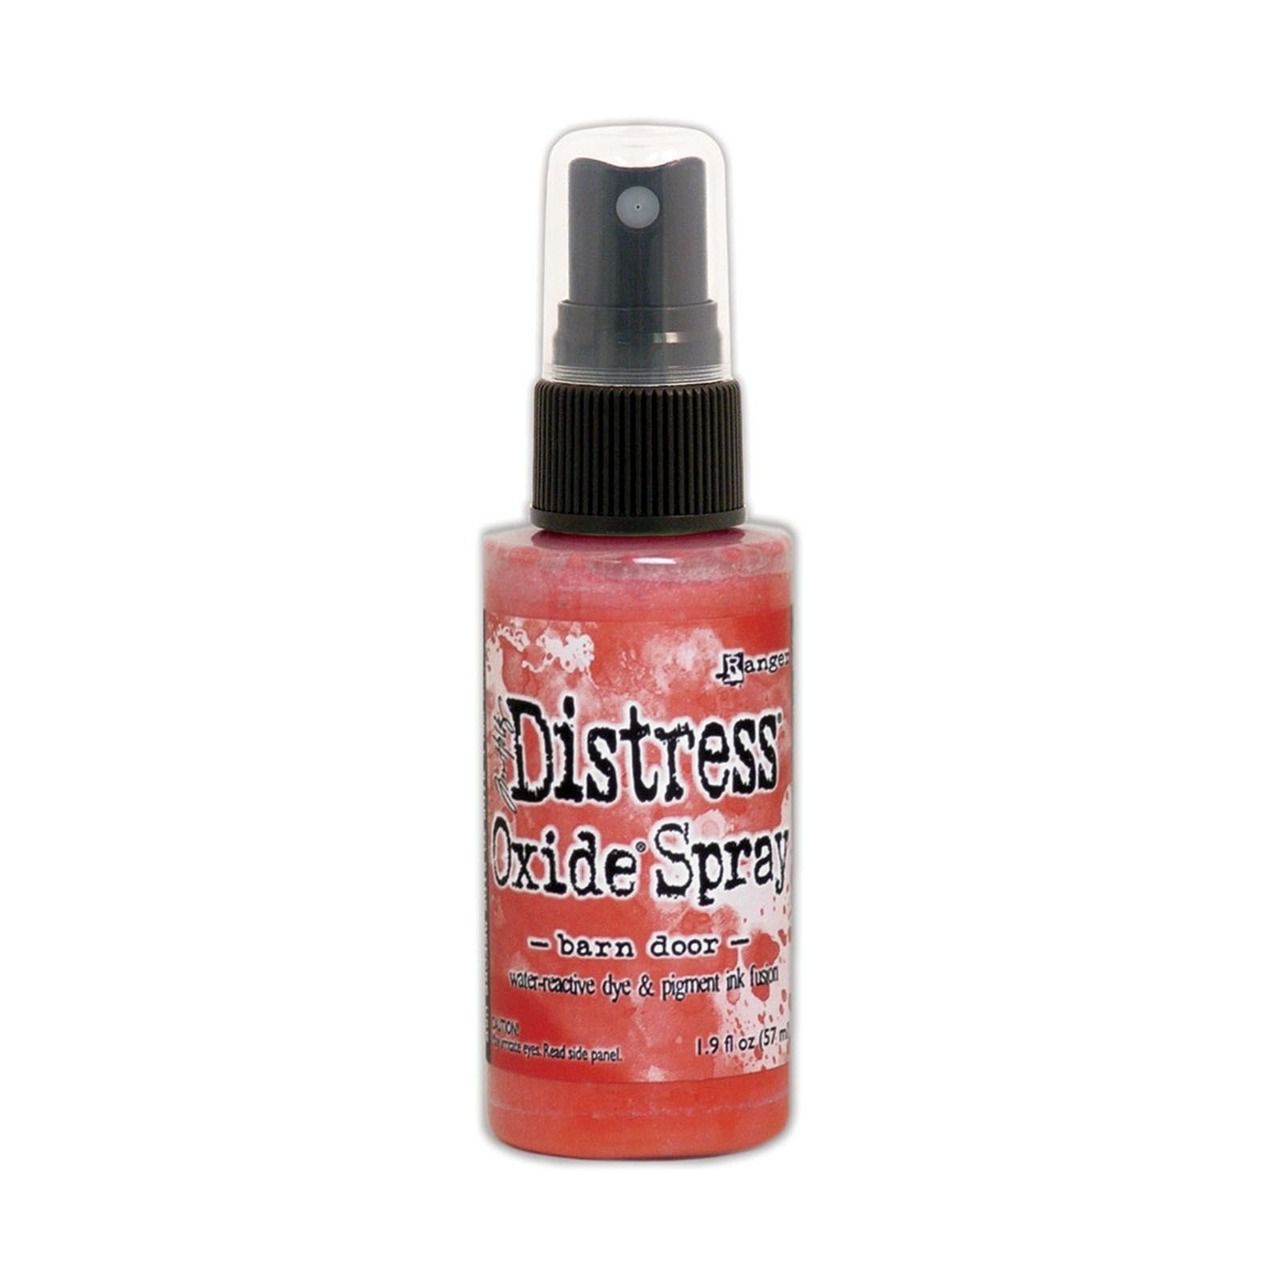 Distress spray oxide : Barn door